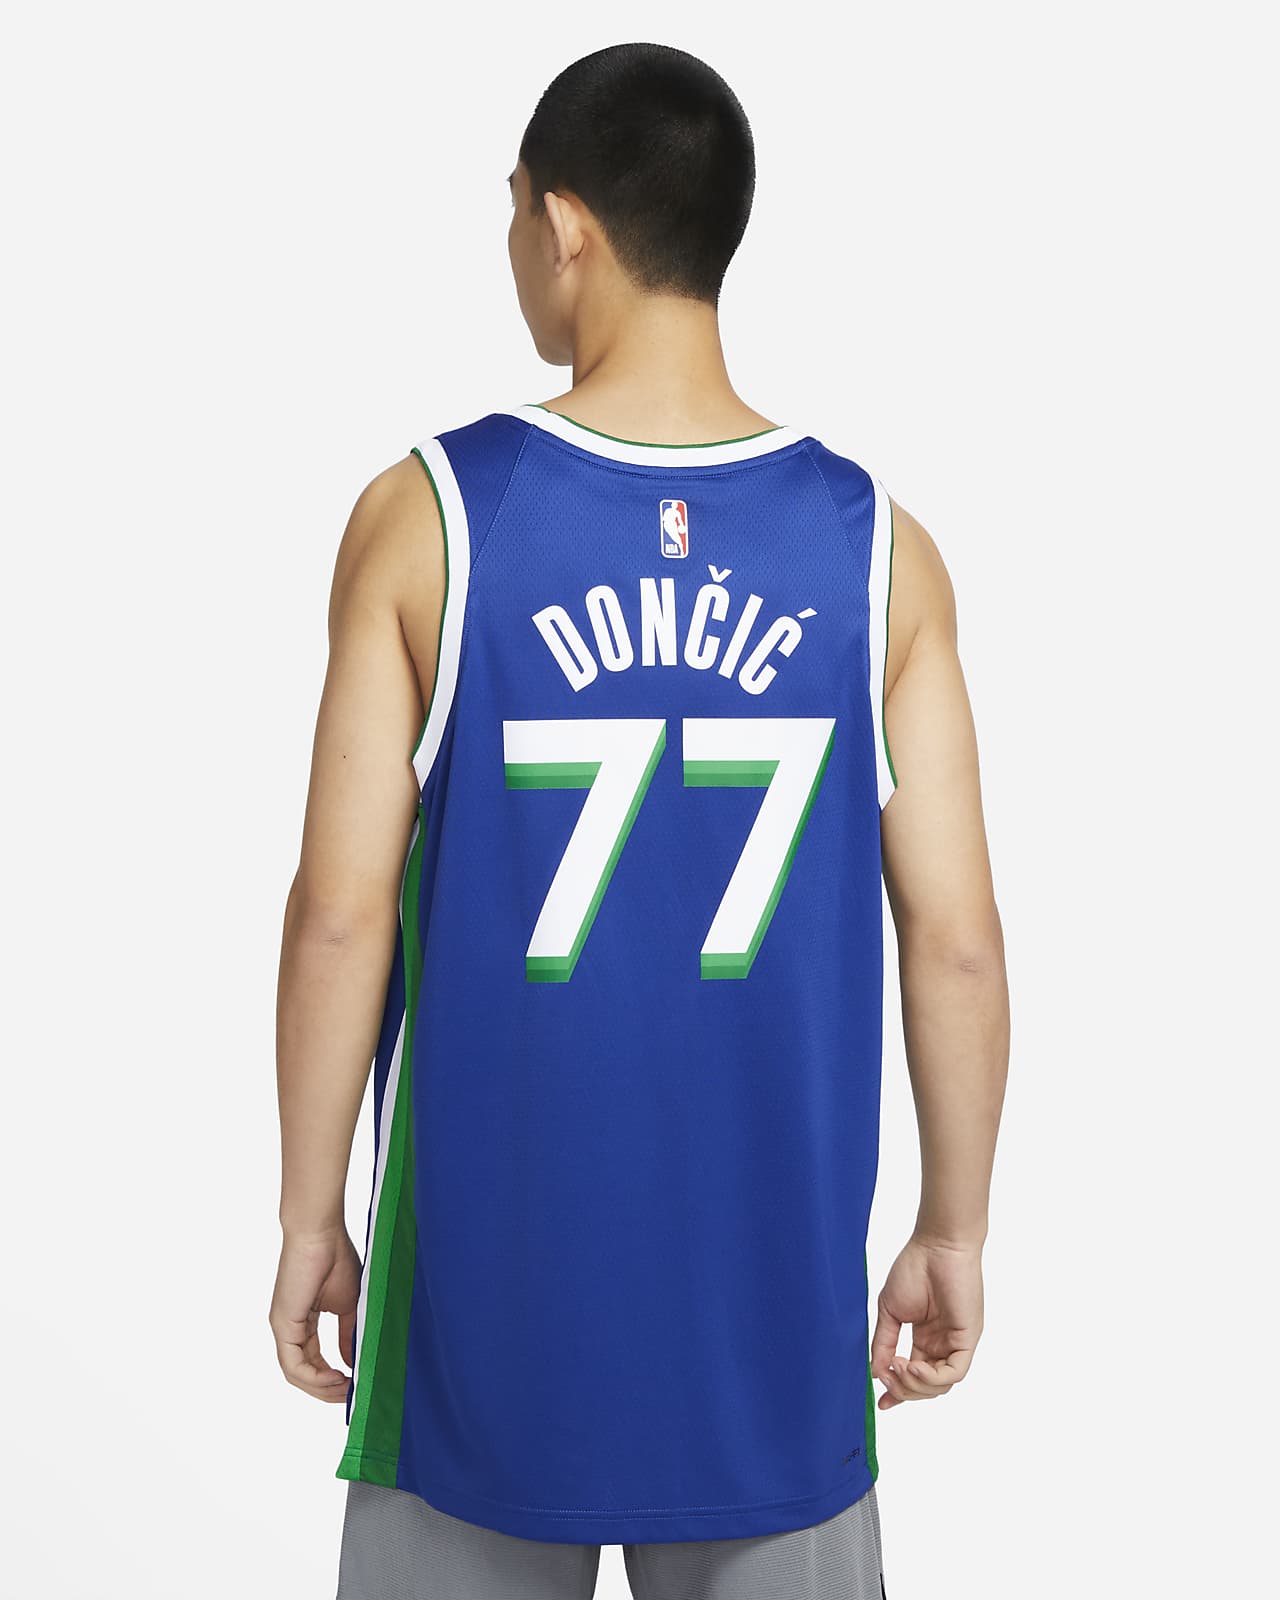 Luka Doncic Dallas Mavericks City Edition Nike Dri-FIT NBA Swingman Jersey.